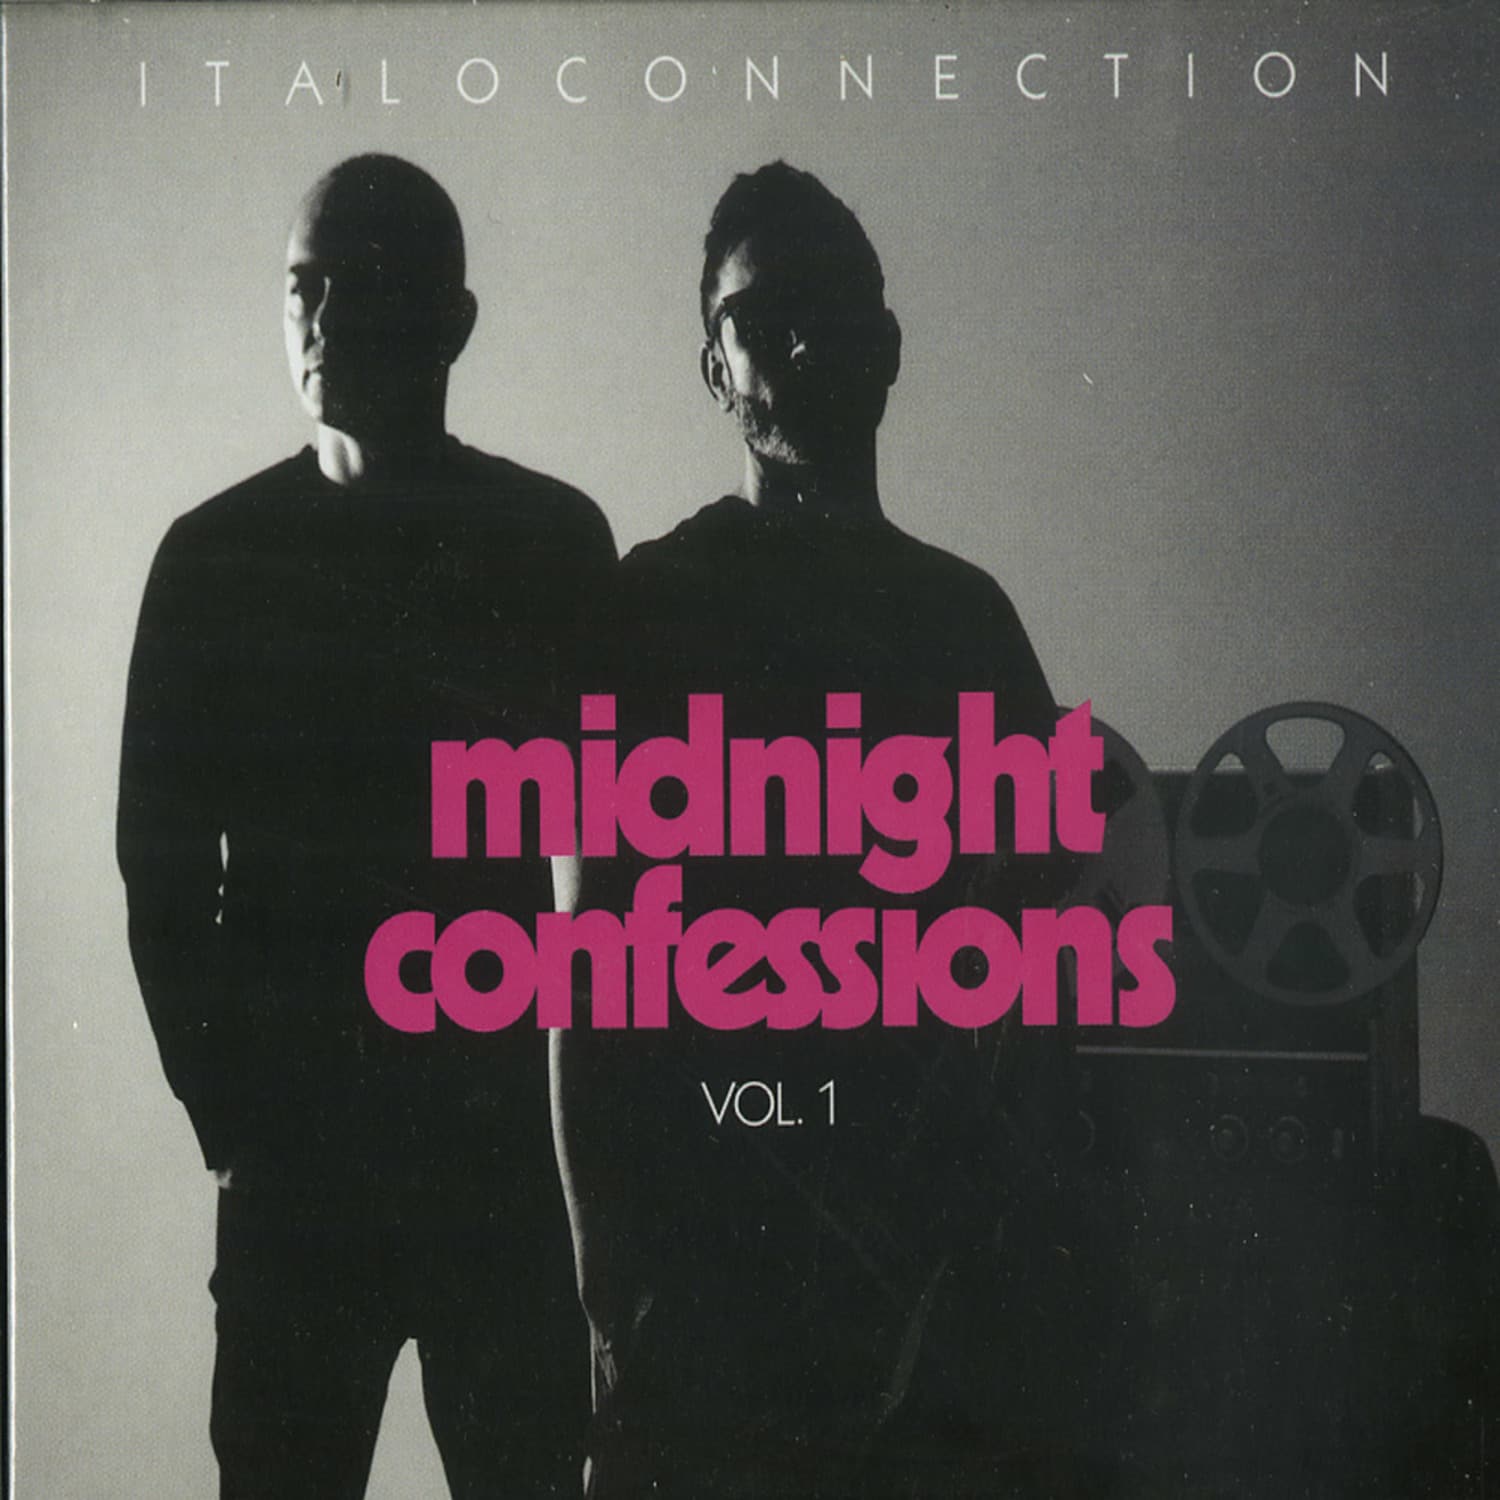 Italoconnection - MIDNIGHT CONFESSIONS VOL. 1 